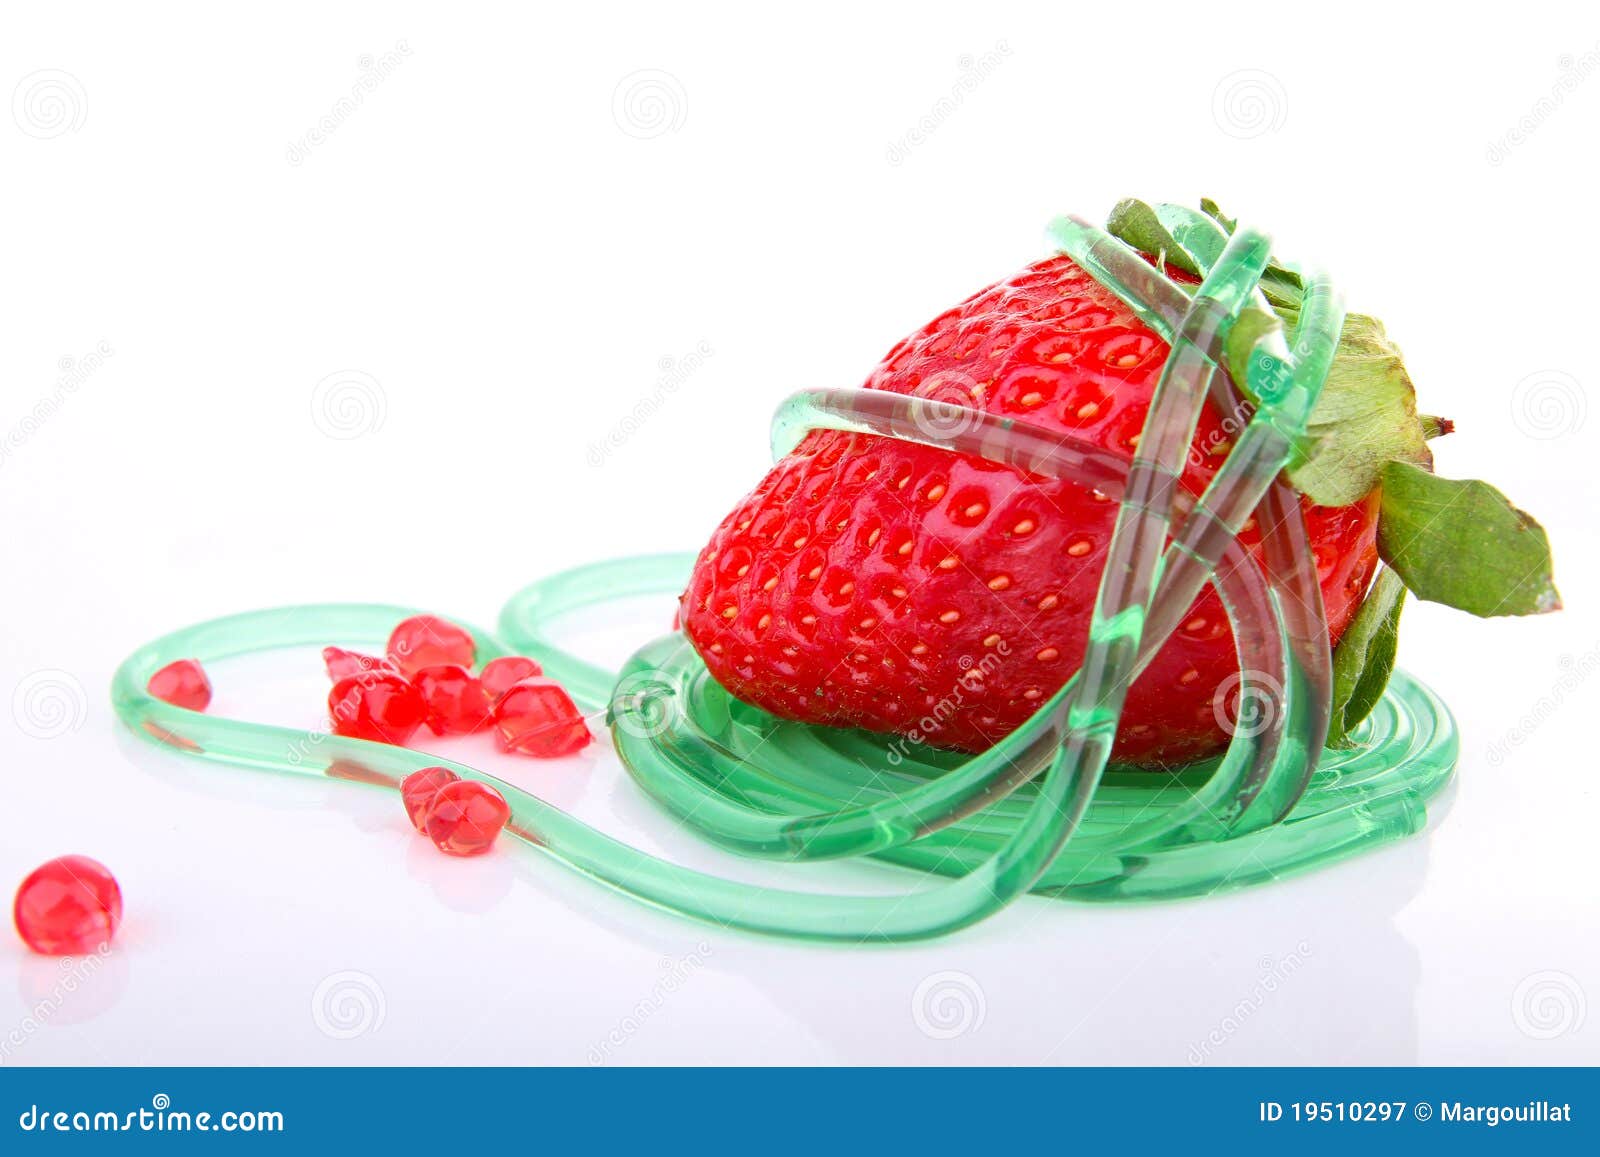 strawberry and molecular food